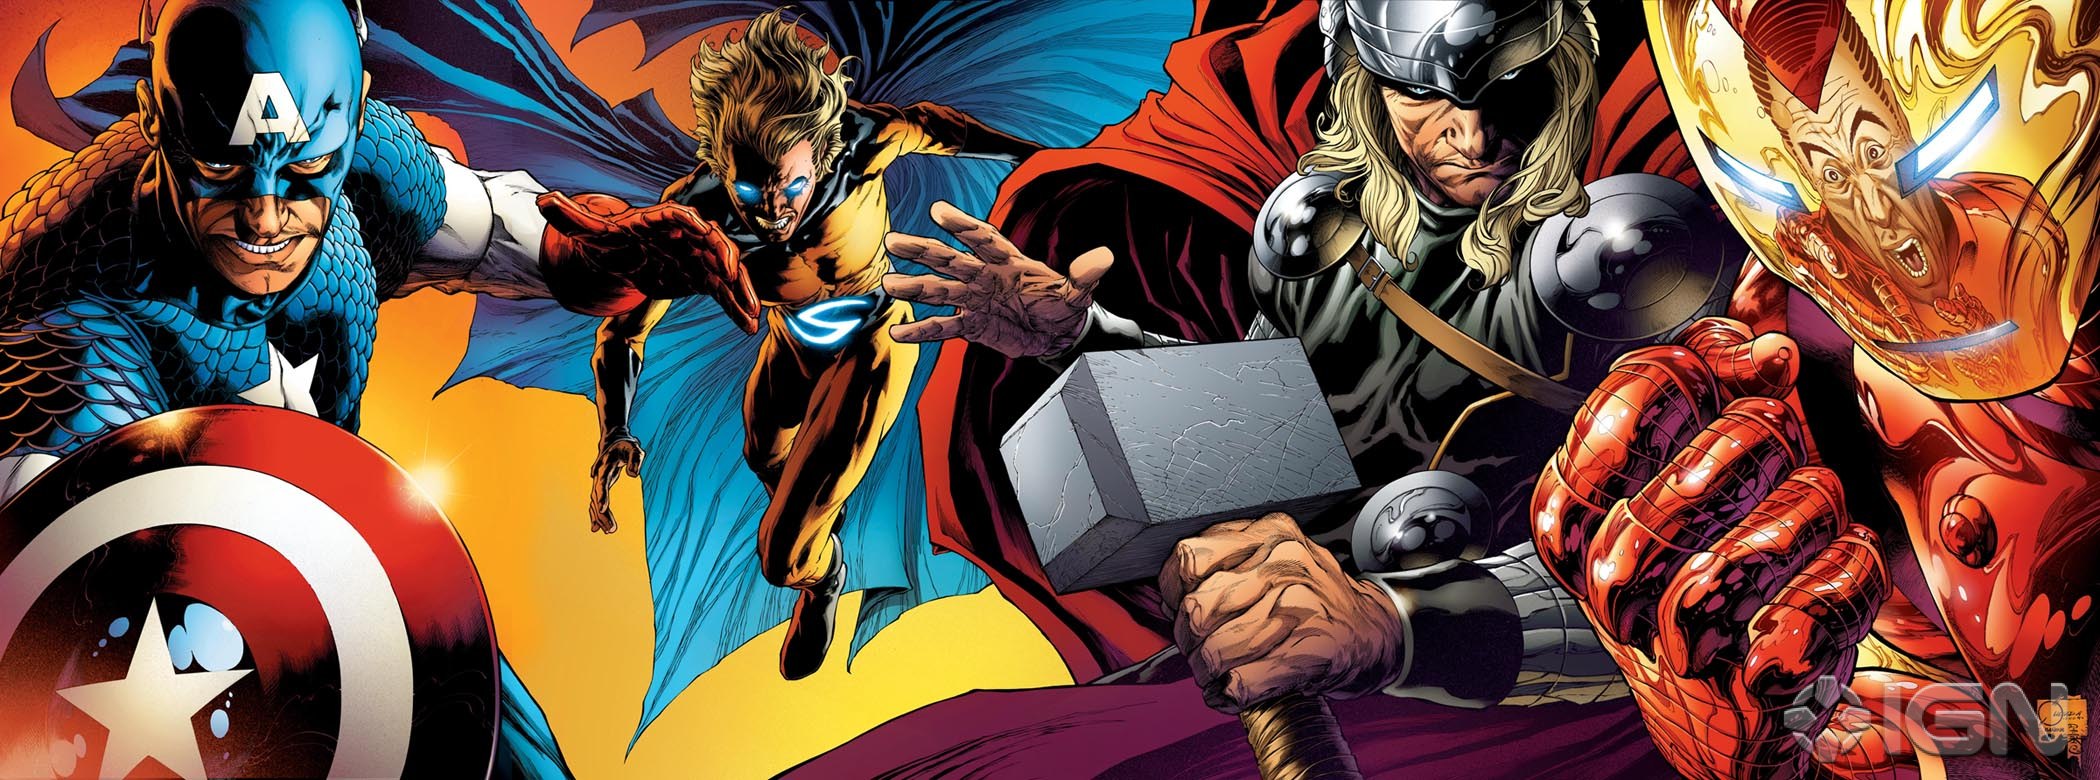 comics, avengers, captain america, iron man, sentry (marvel comics), thor, the avengers